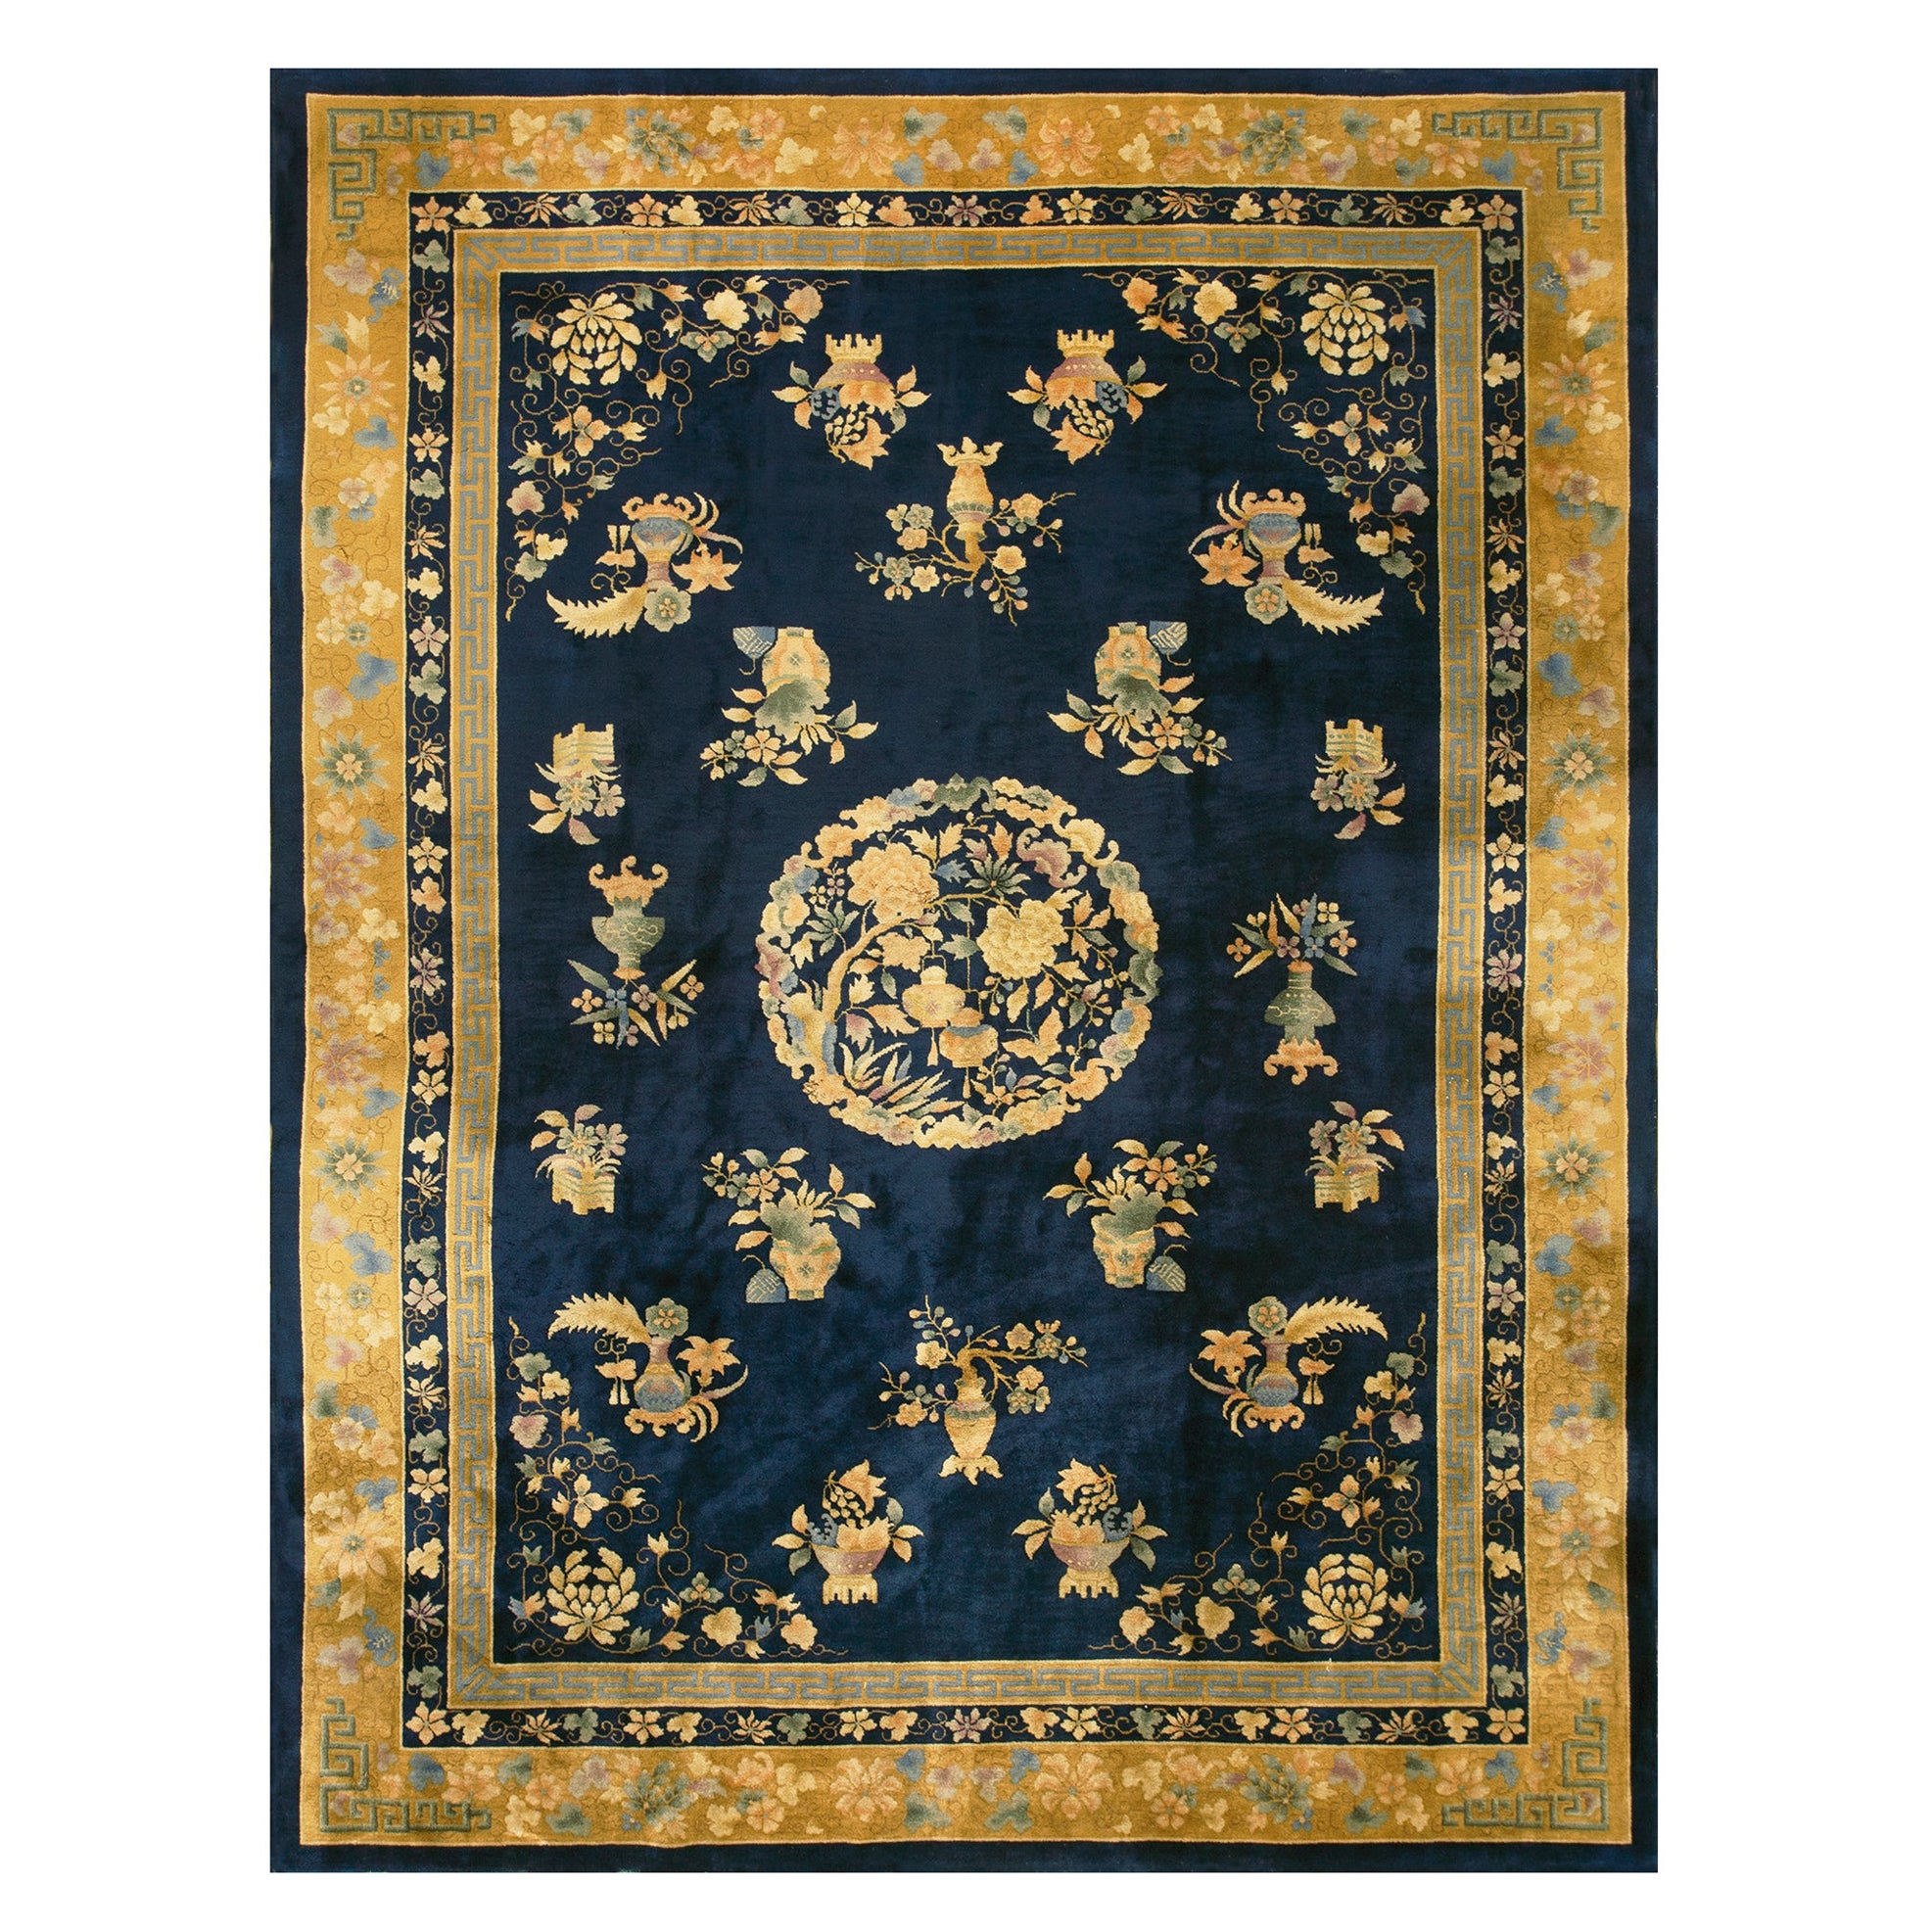 1920s Chinese Art Deco Carpet ( 8' 9'' x 11' 6'' - 266 x 350 cm )